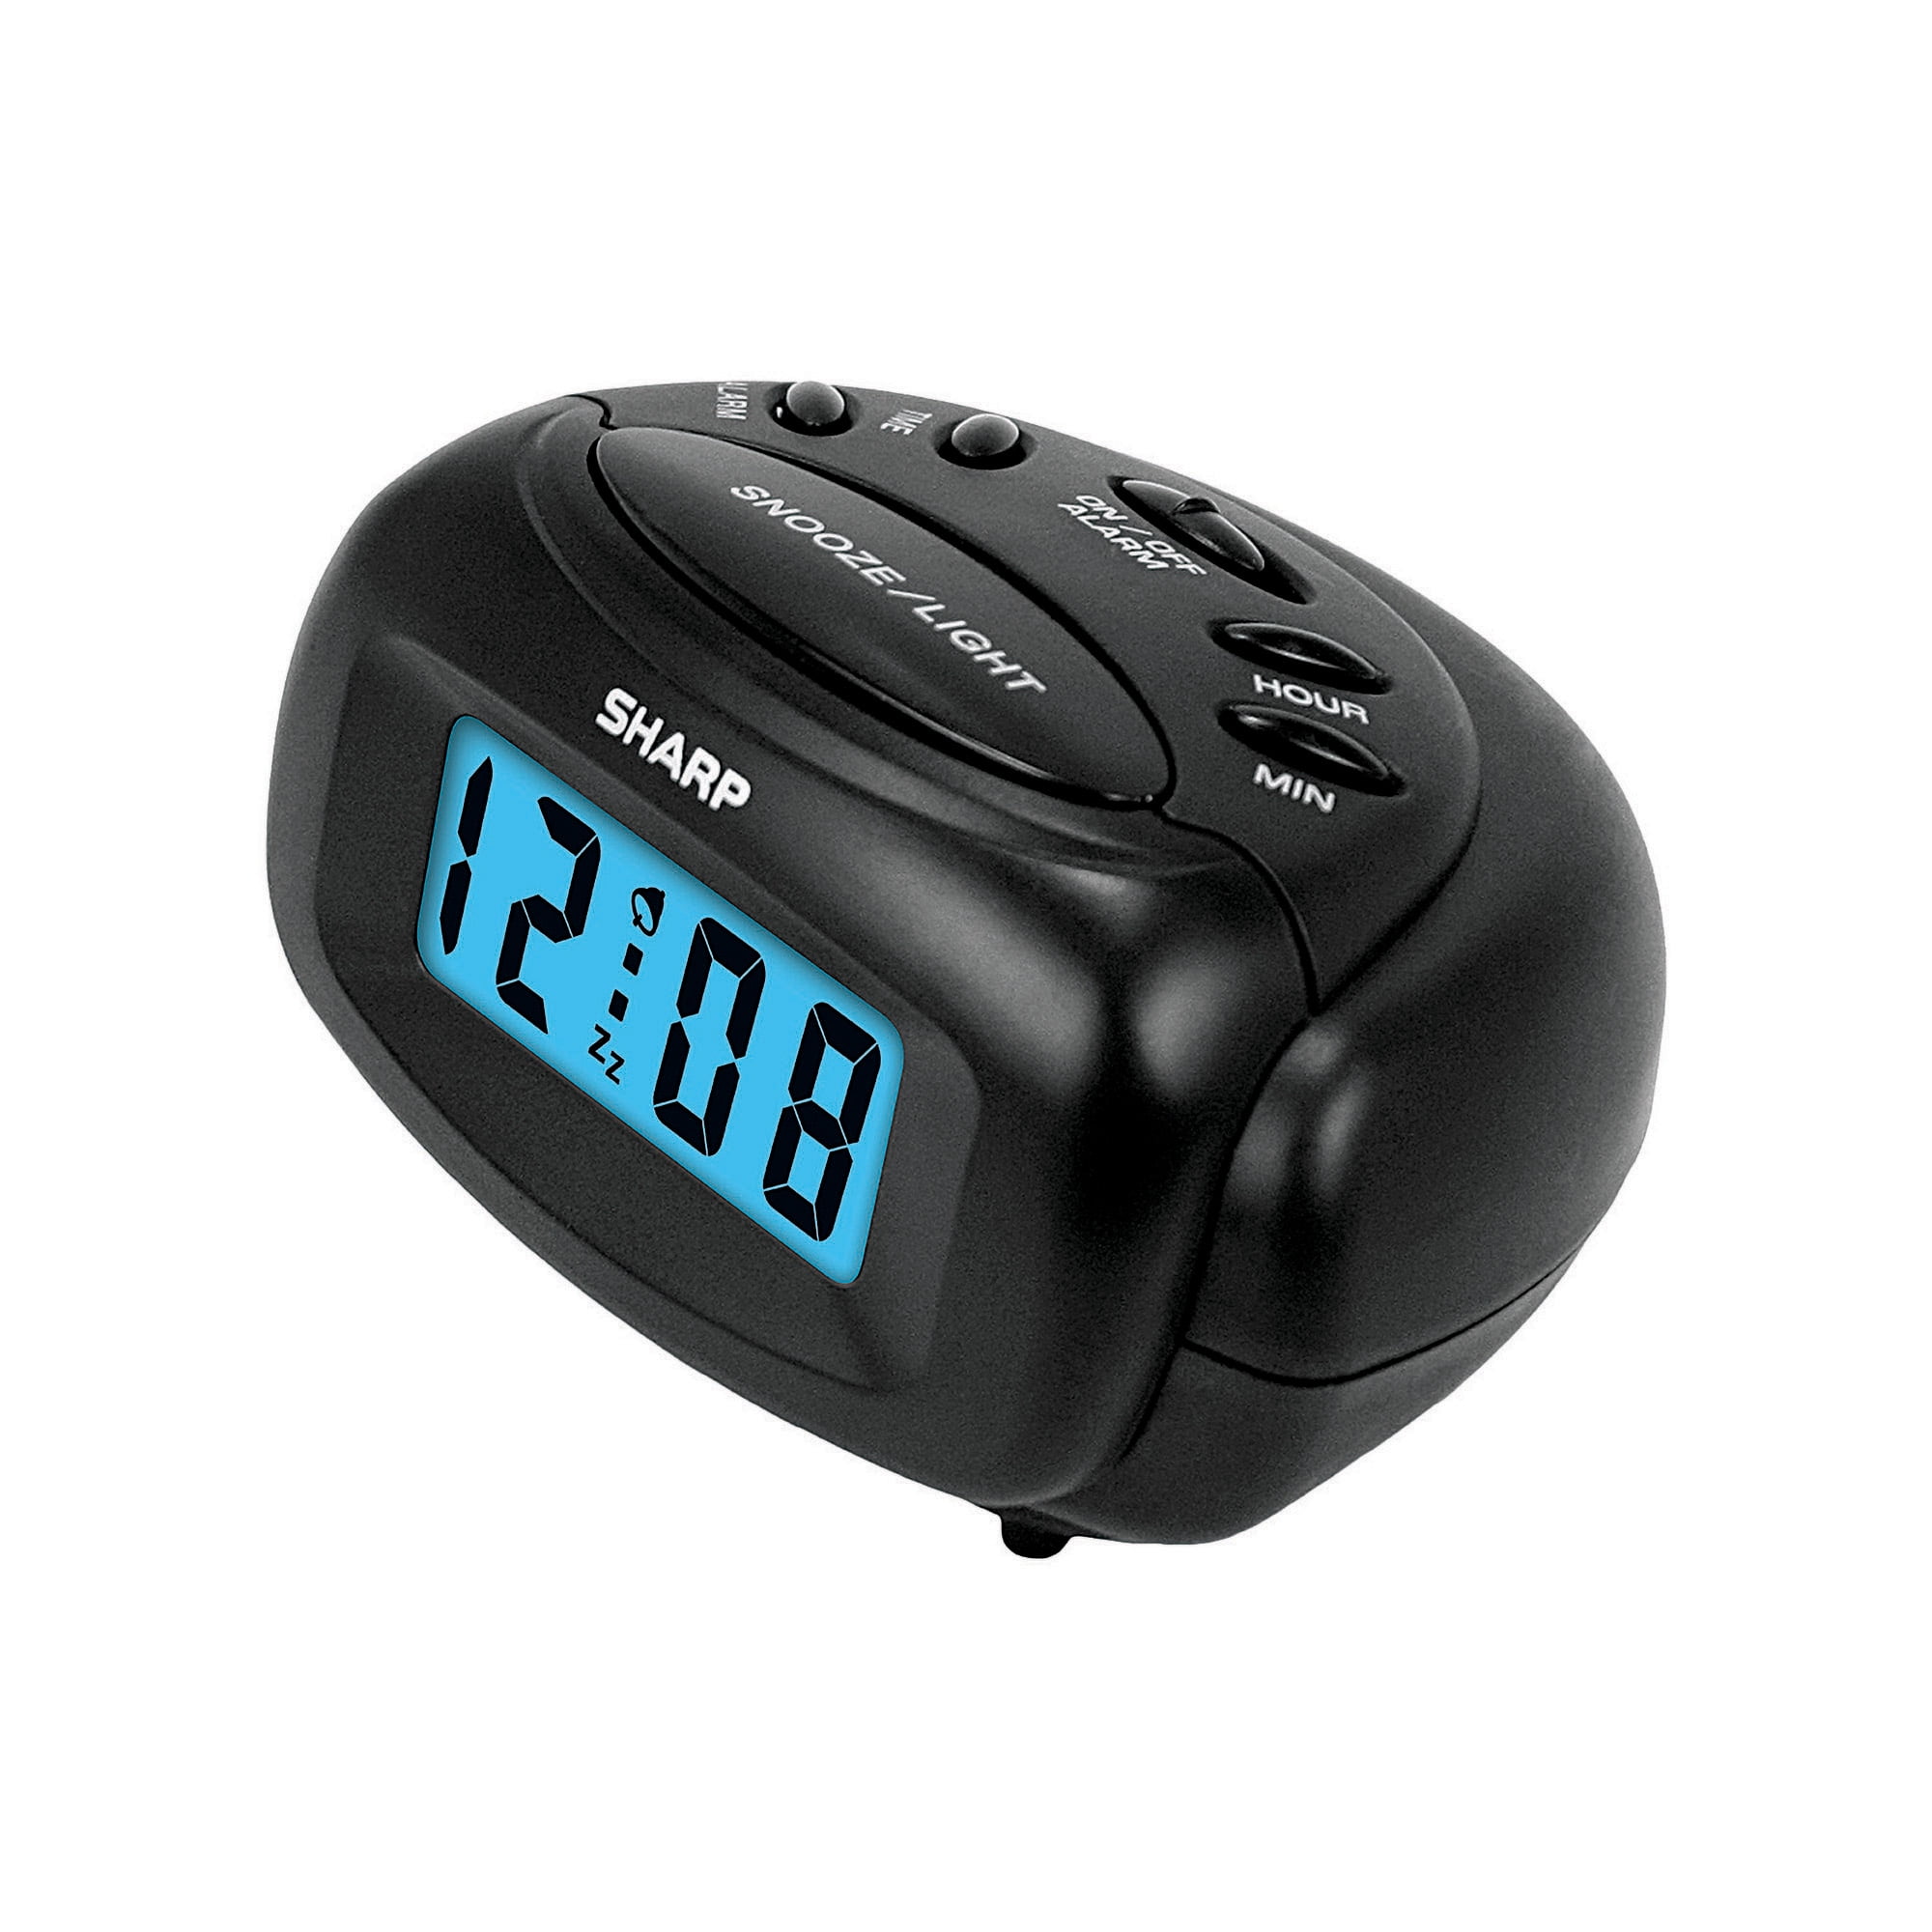 SHARP Digital Alarm Clock with Keyboard Style Controls 